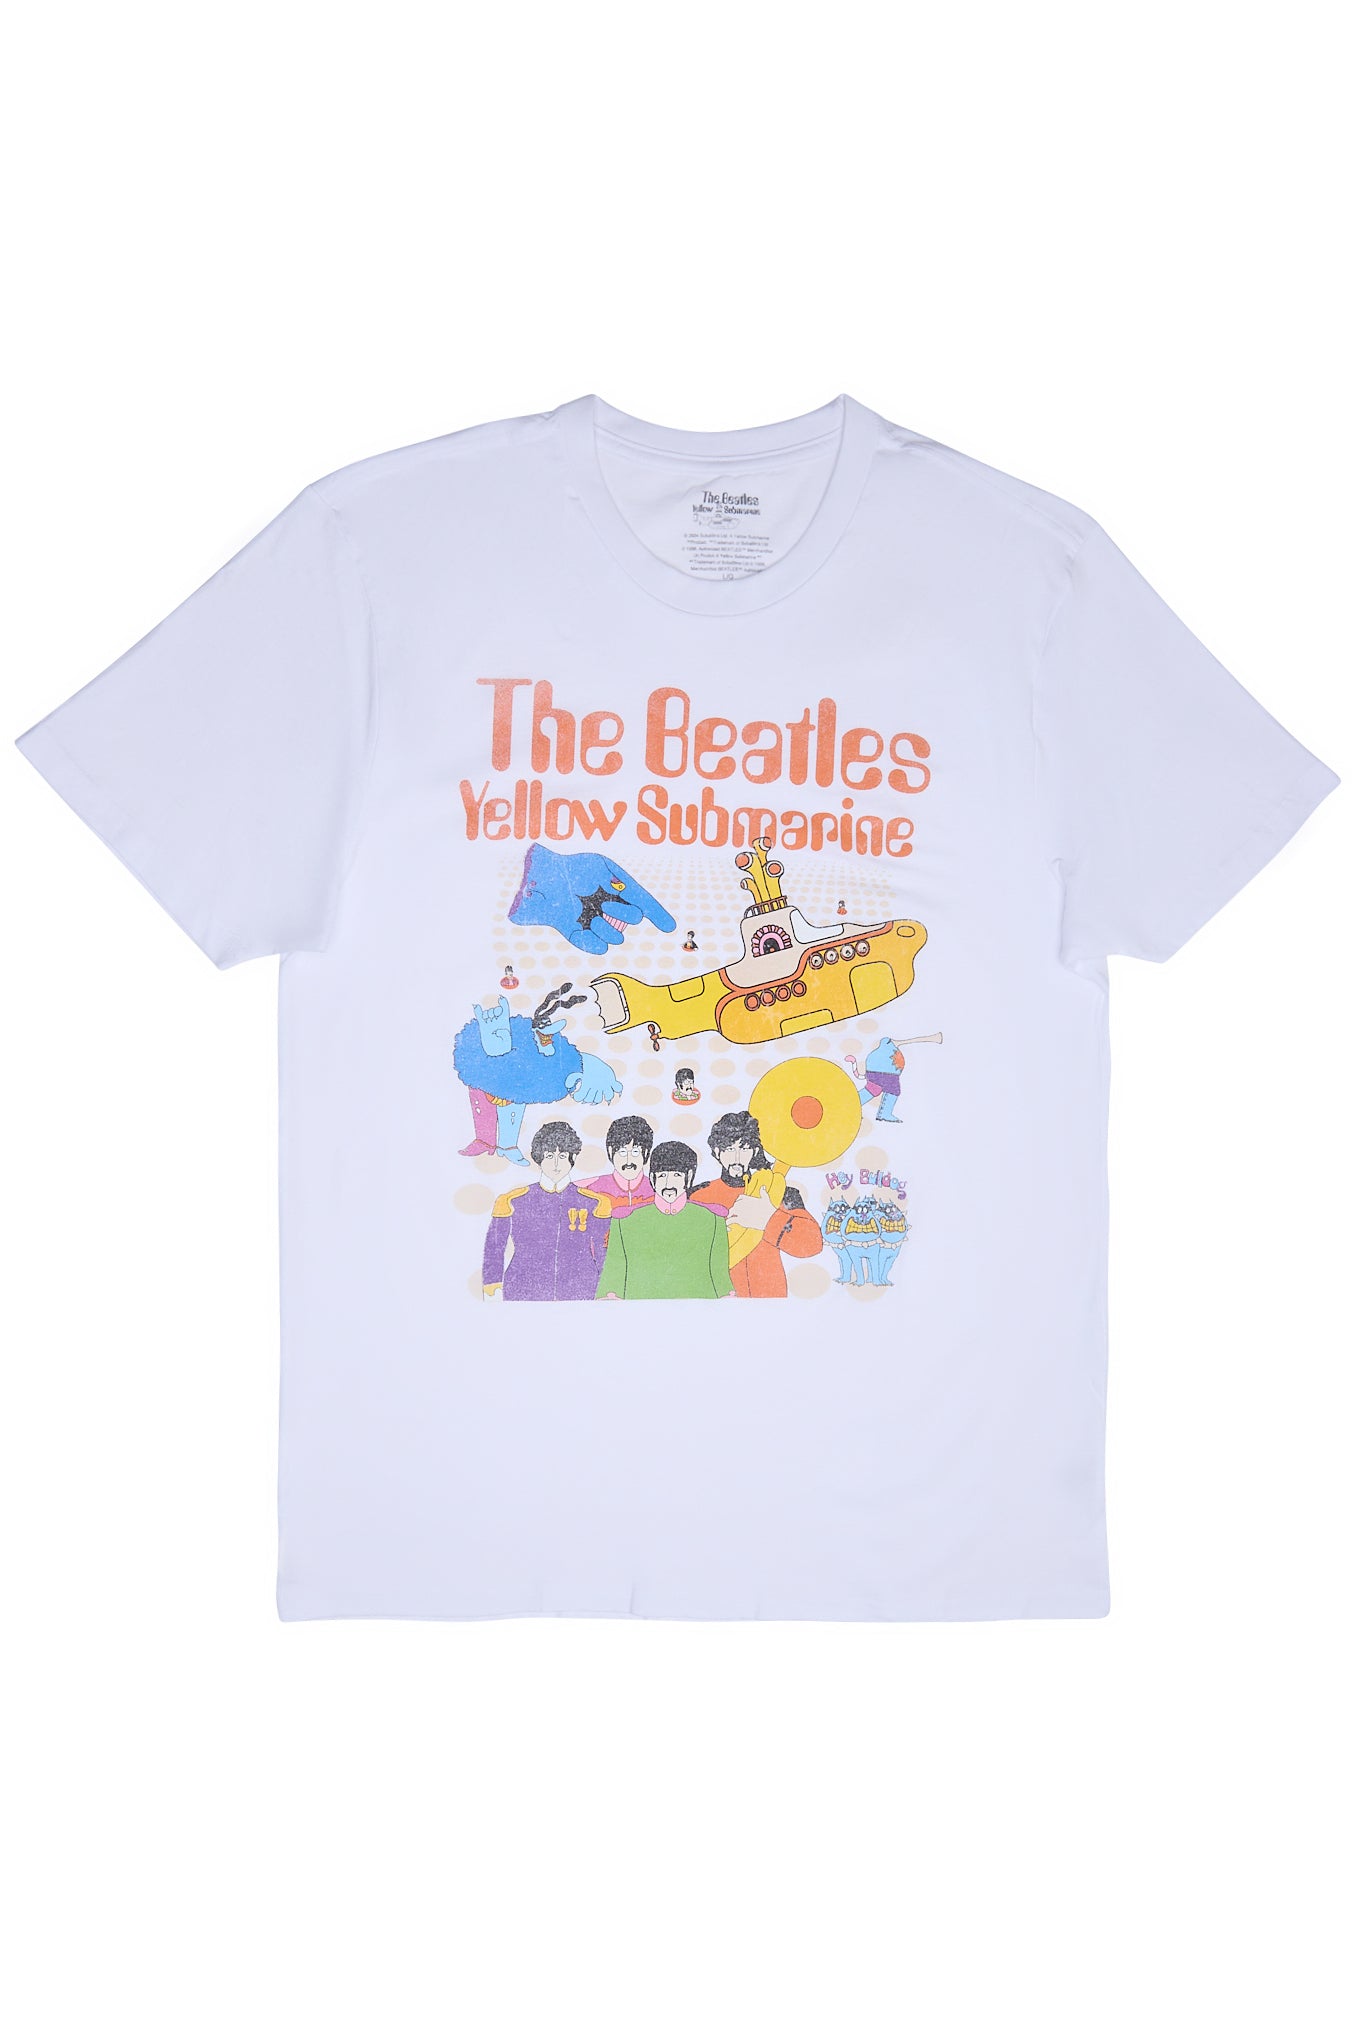 The Beatles Yellow Submarine Graphic Tee